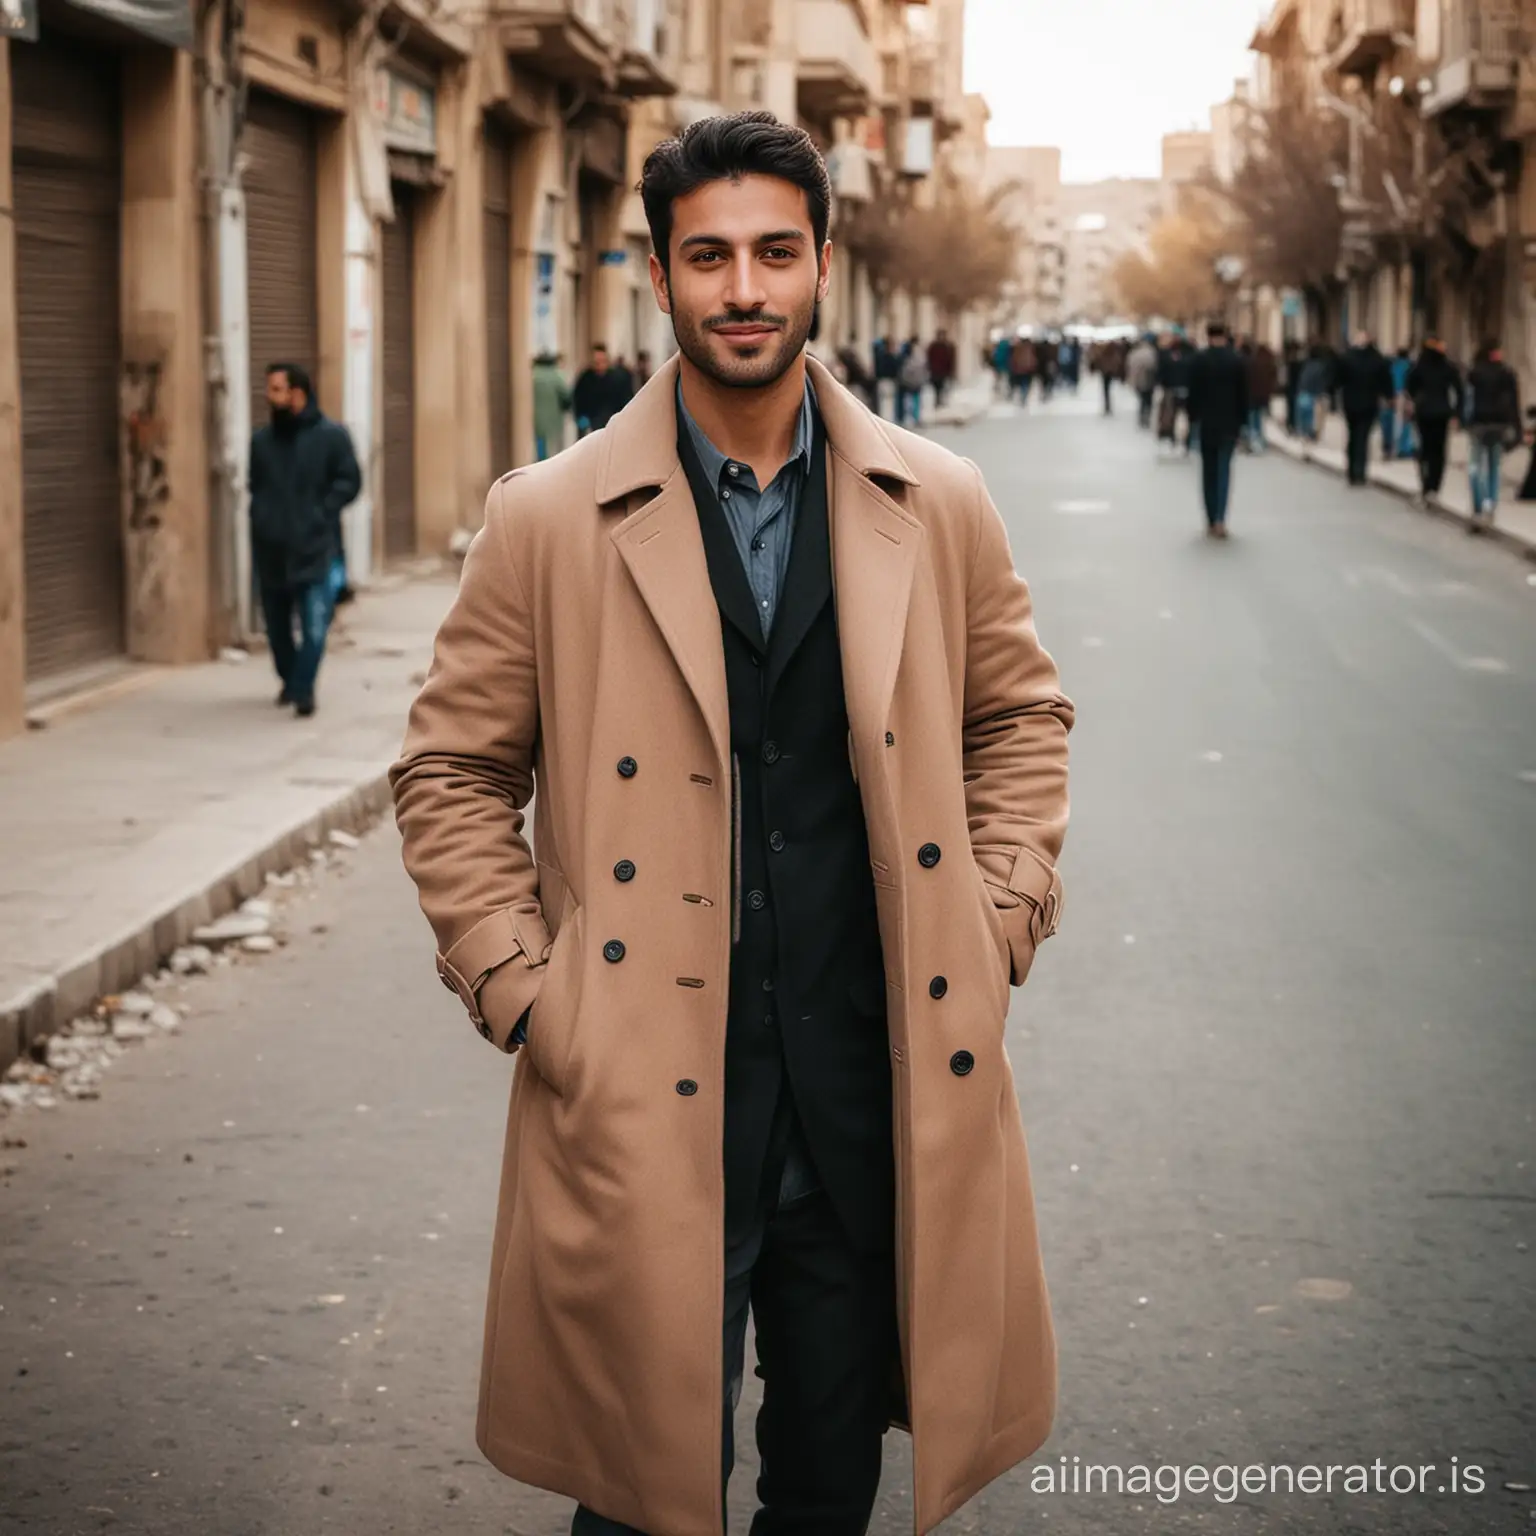 A handsome man in coat in Iran in street